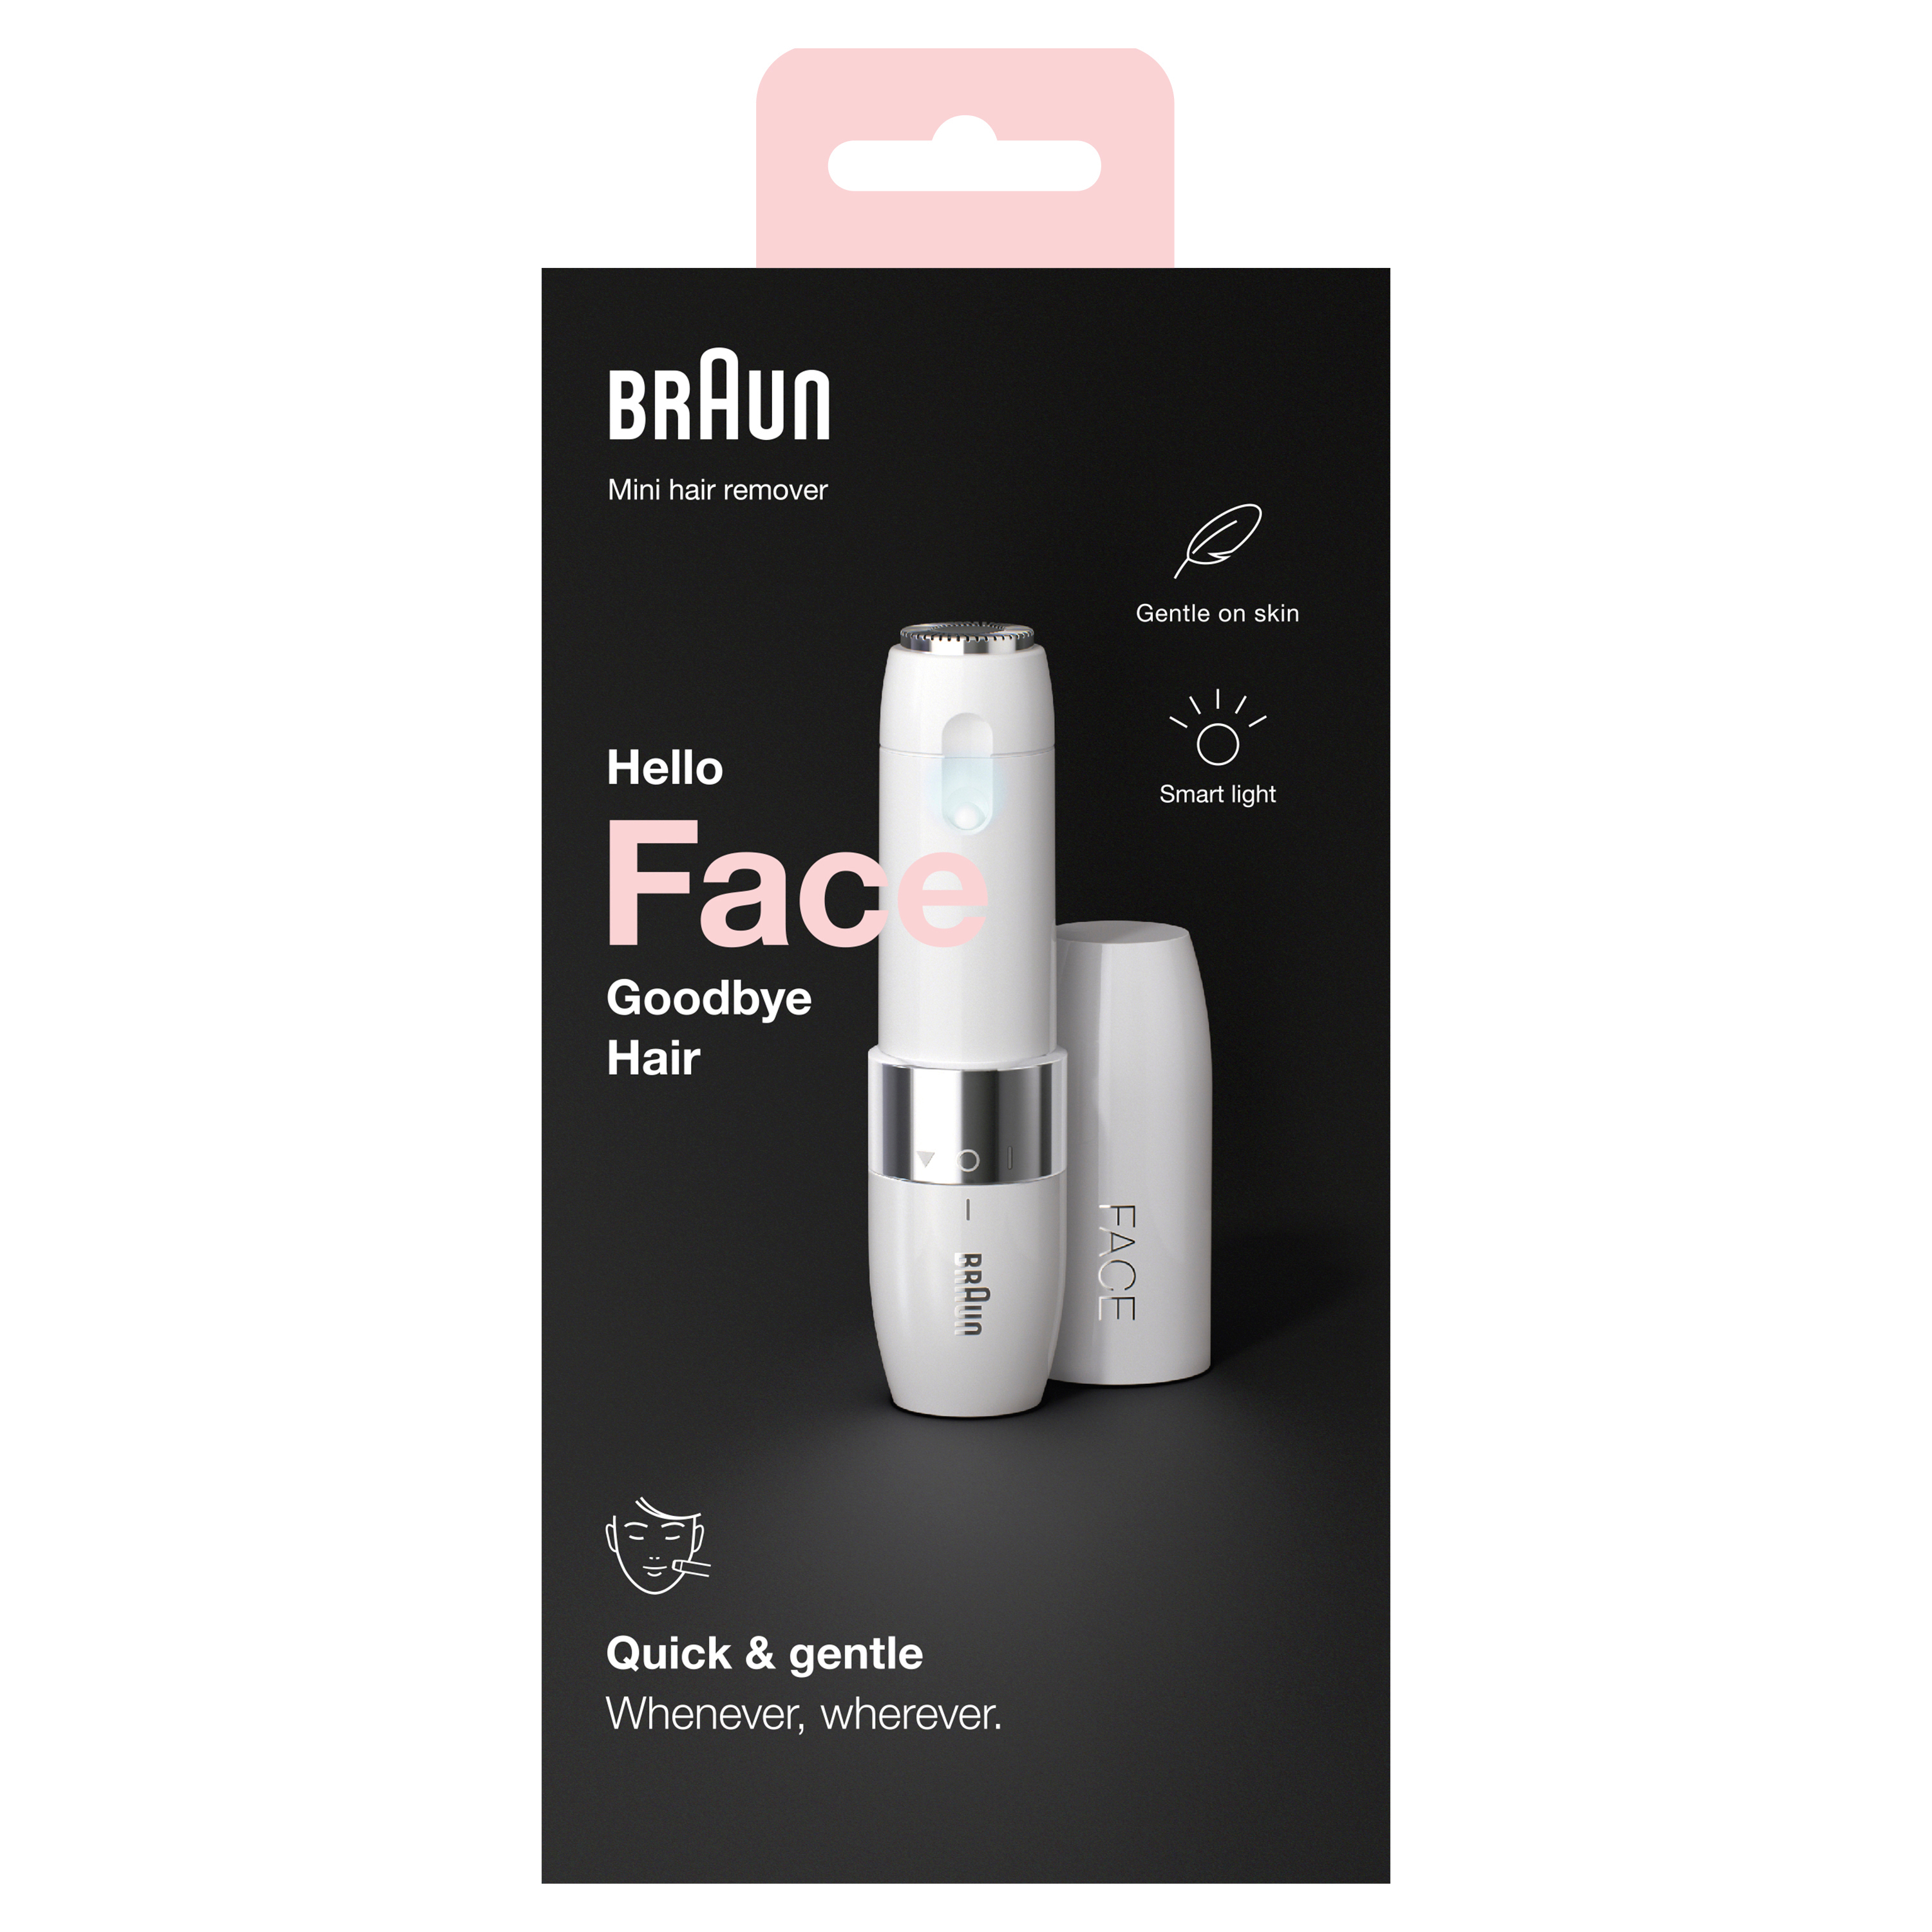 Braun Personal Care Face Mini Hair Remover FS1000 4210201313908 #face